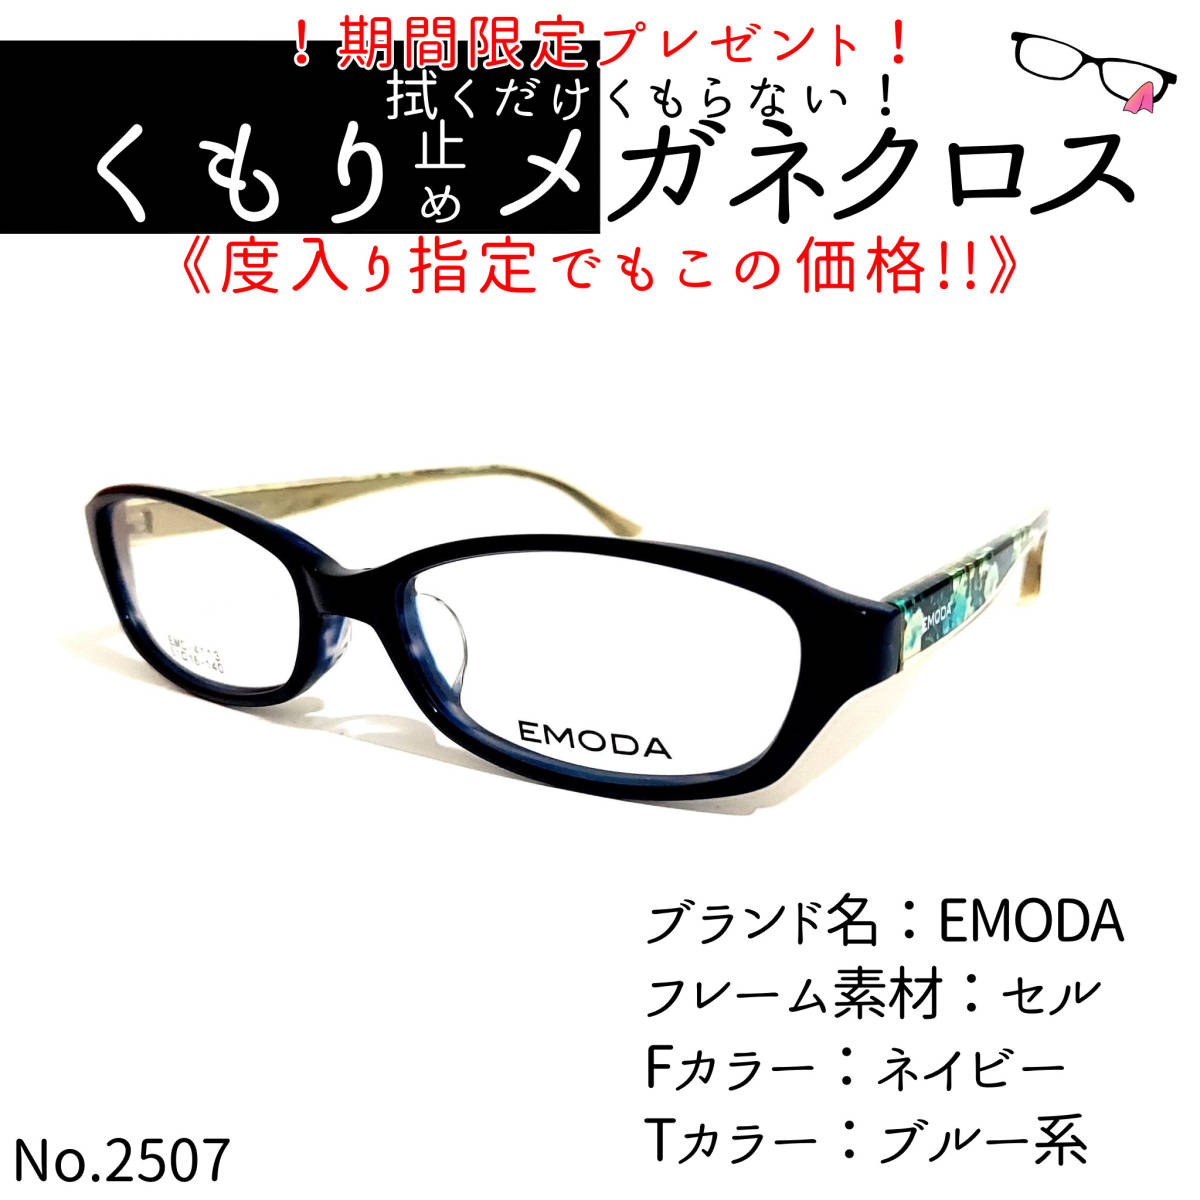 No.2507＋メガネ EMODA【度数入り込み価格】-